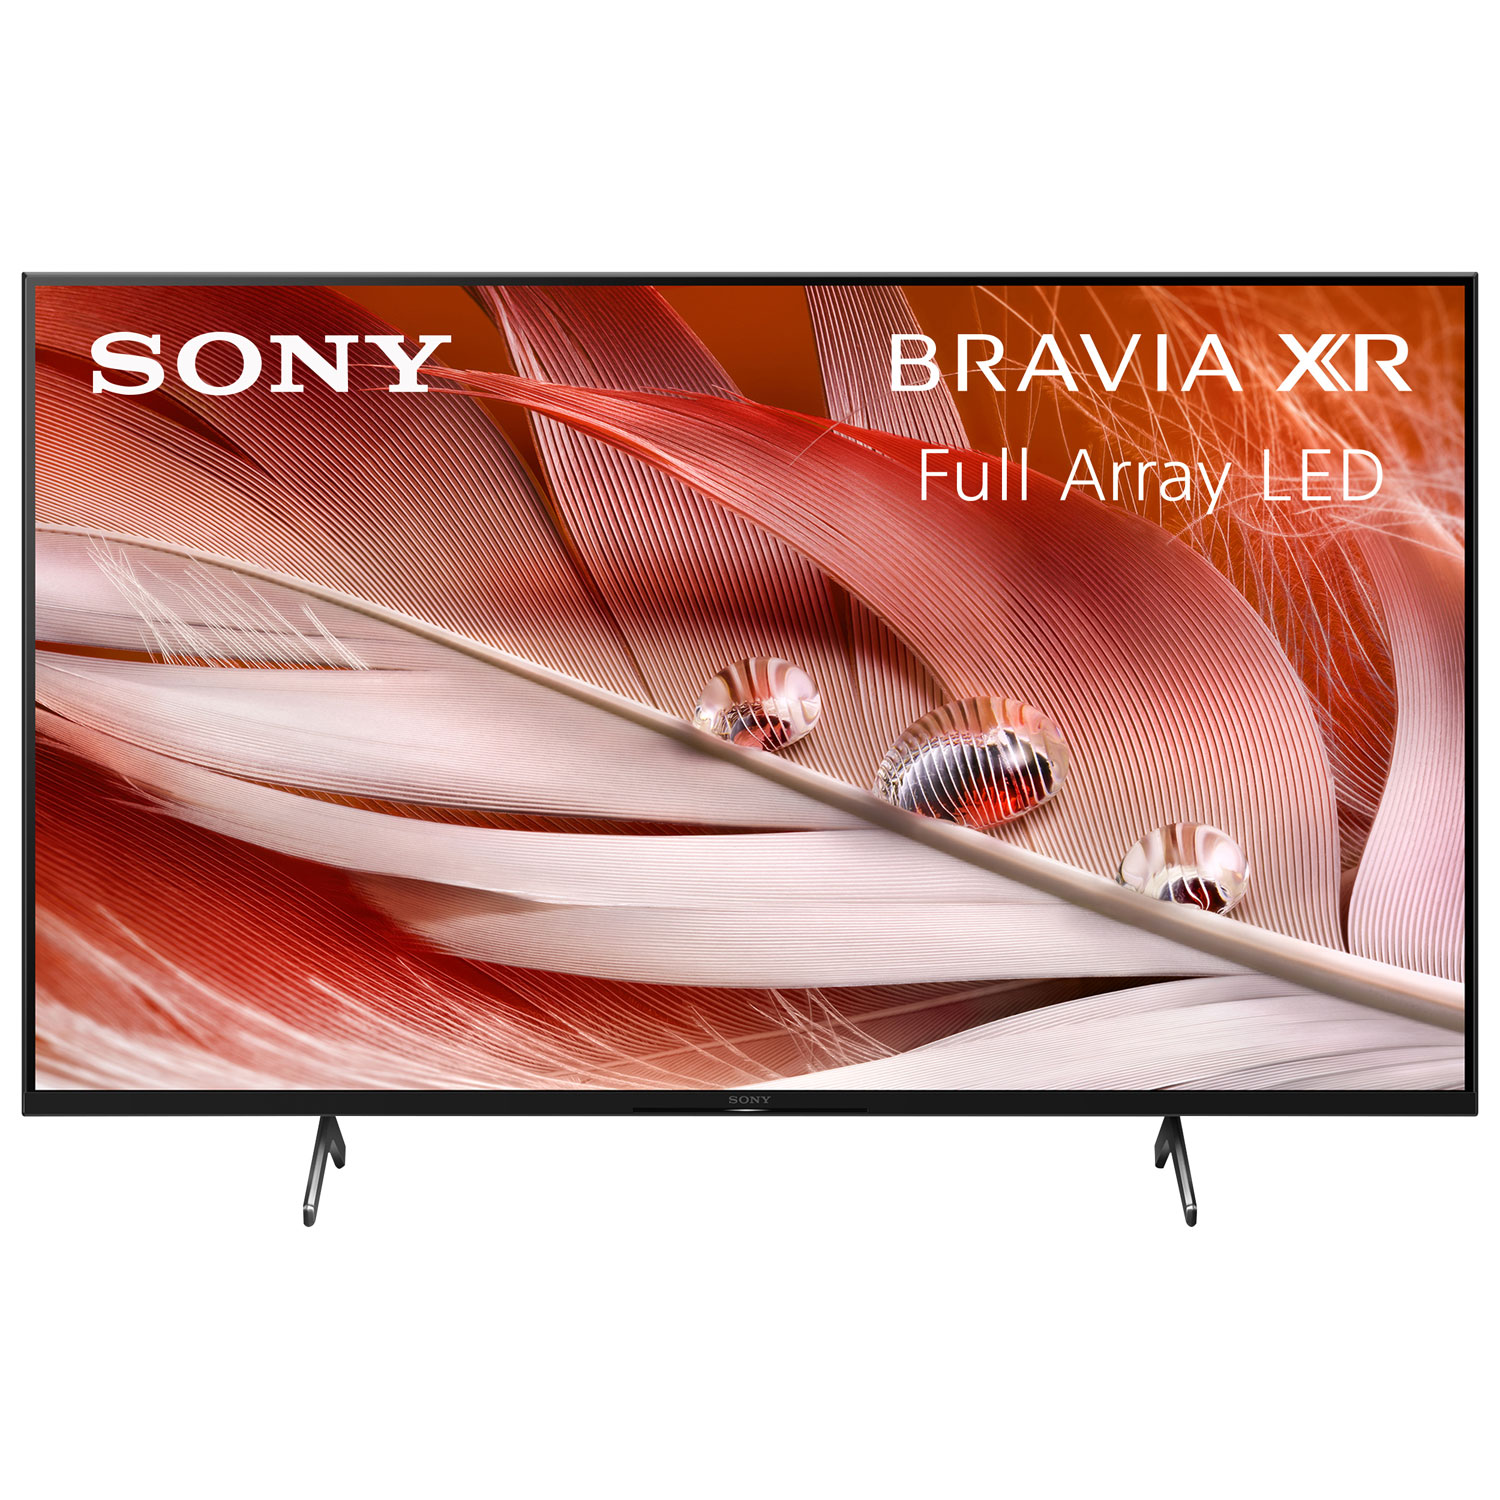 Sony BRAVIA XR X90J 50" 4K UHD HDR LED Smart Google TV (XR50X90J) - 2021